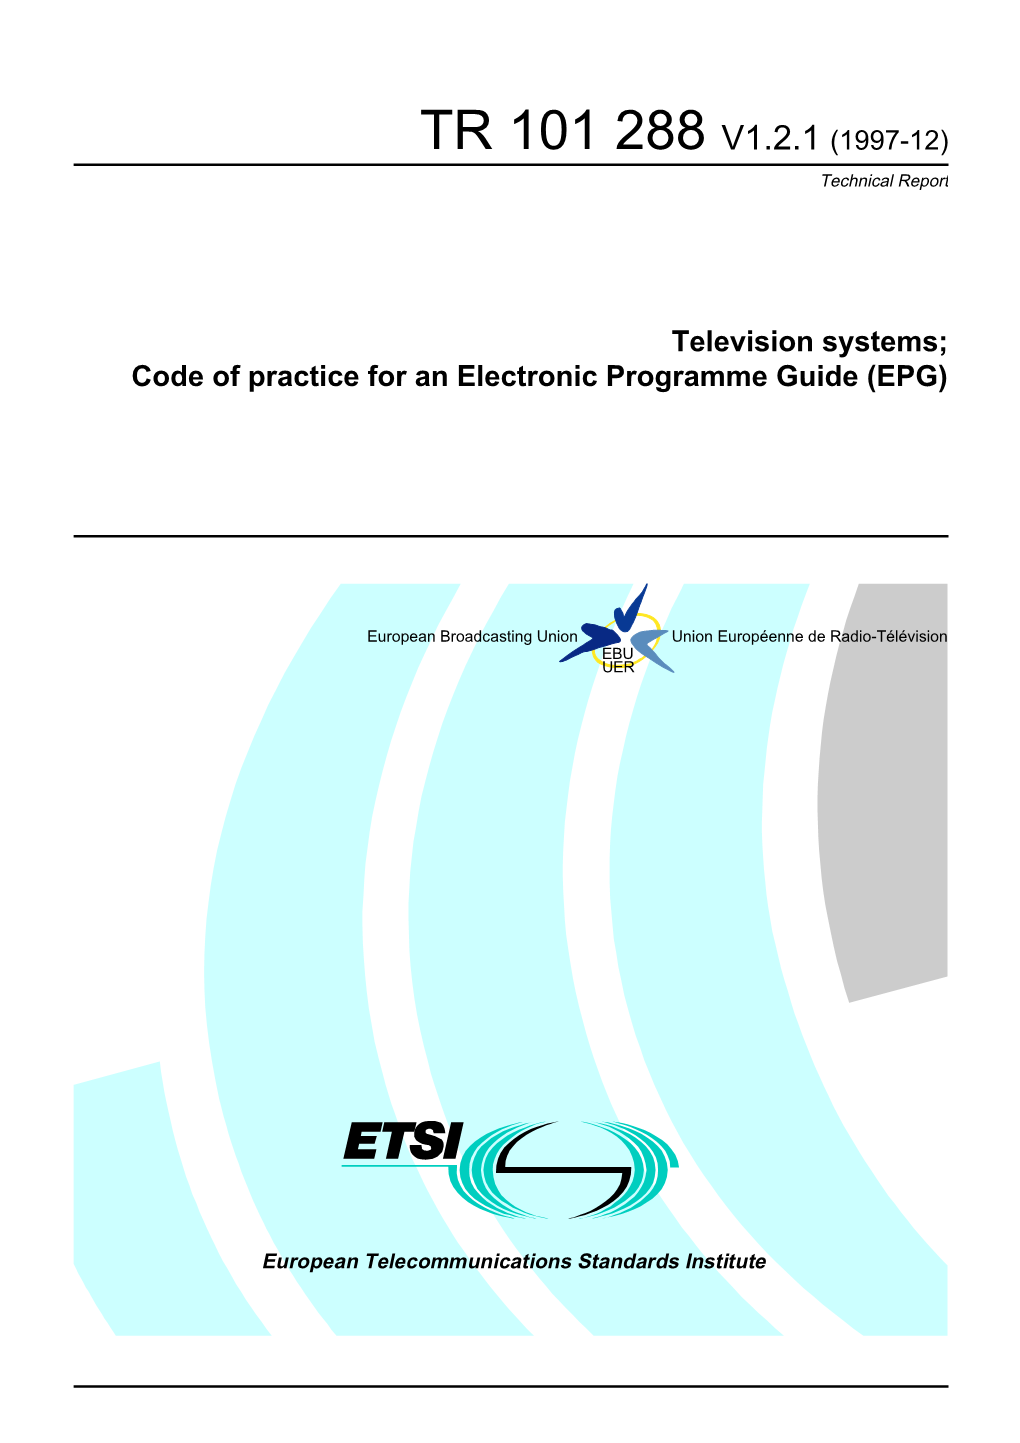 TR 101 288 V1.2.1 (1997-12) Technical Report